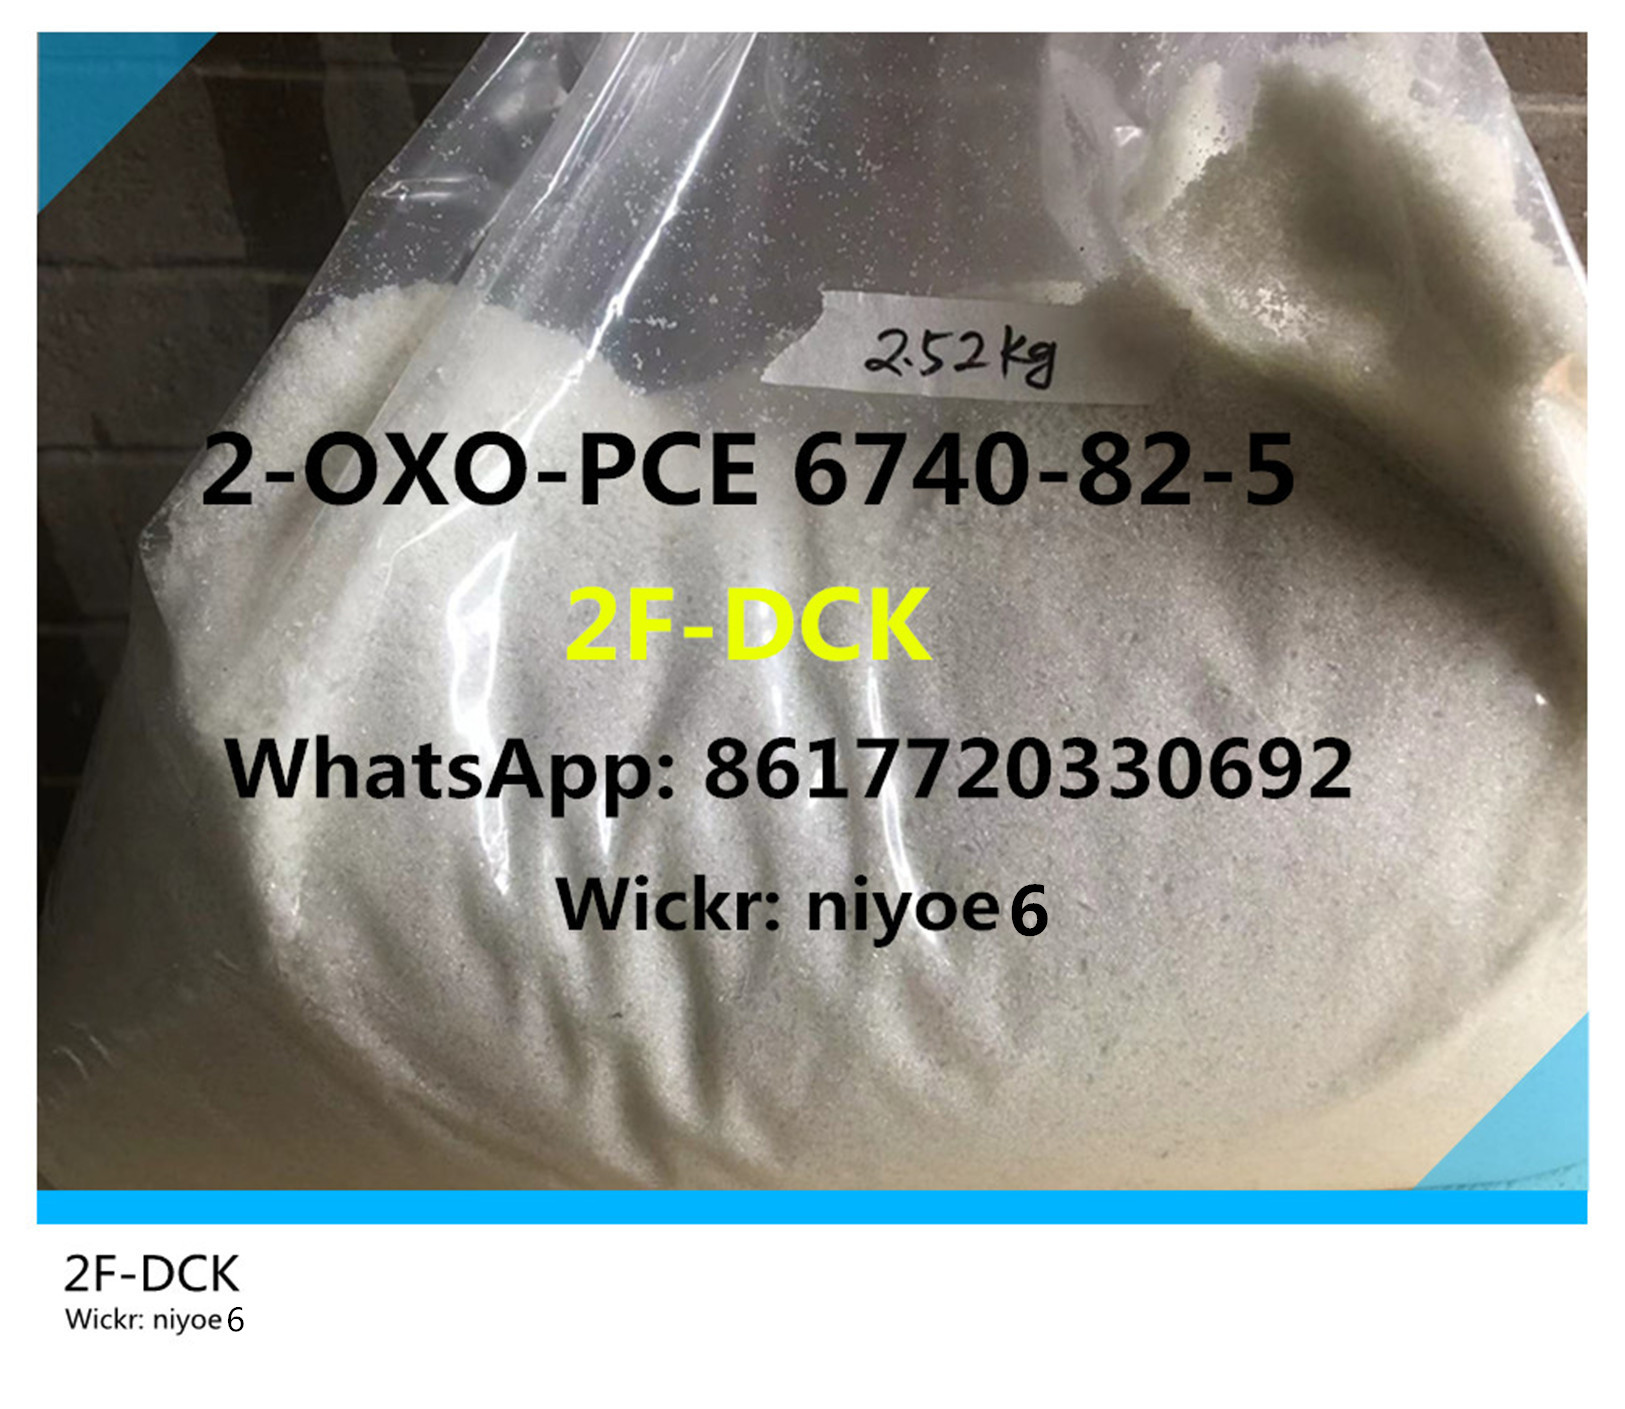 Supply Ketamine Powder 2-OXO-PCE 2PCE HCL for Anesthetic Wickr: niyoe6